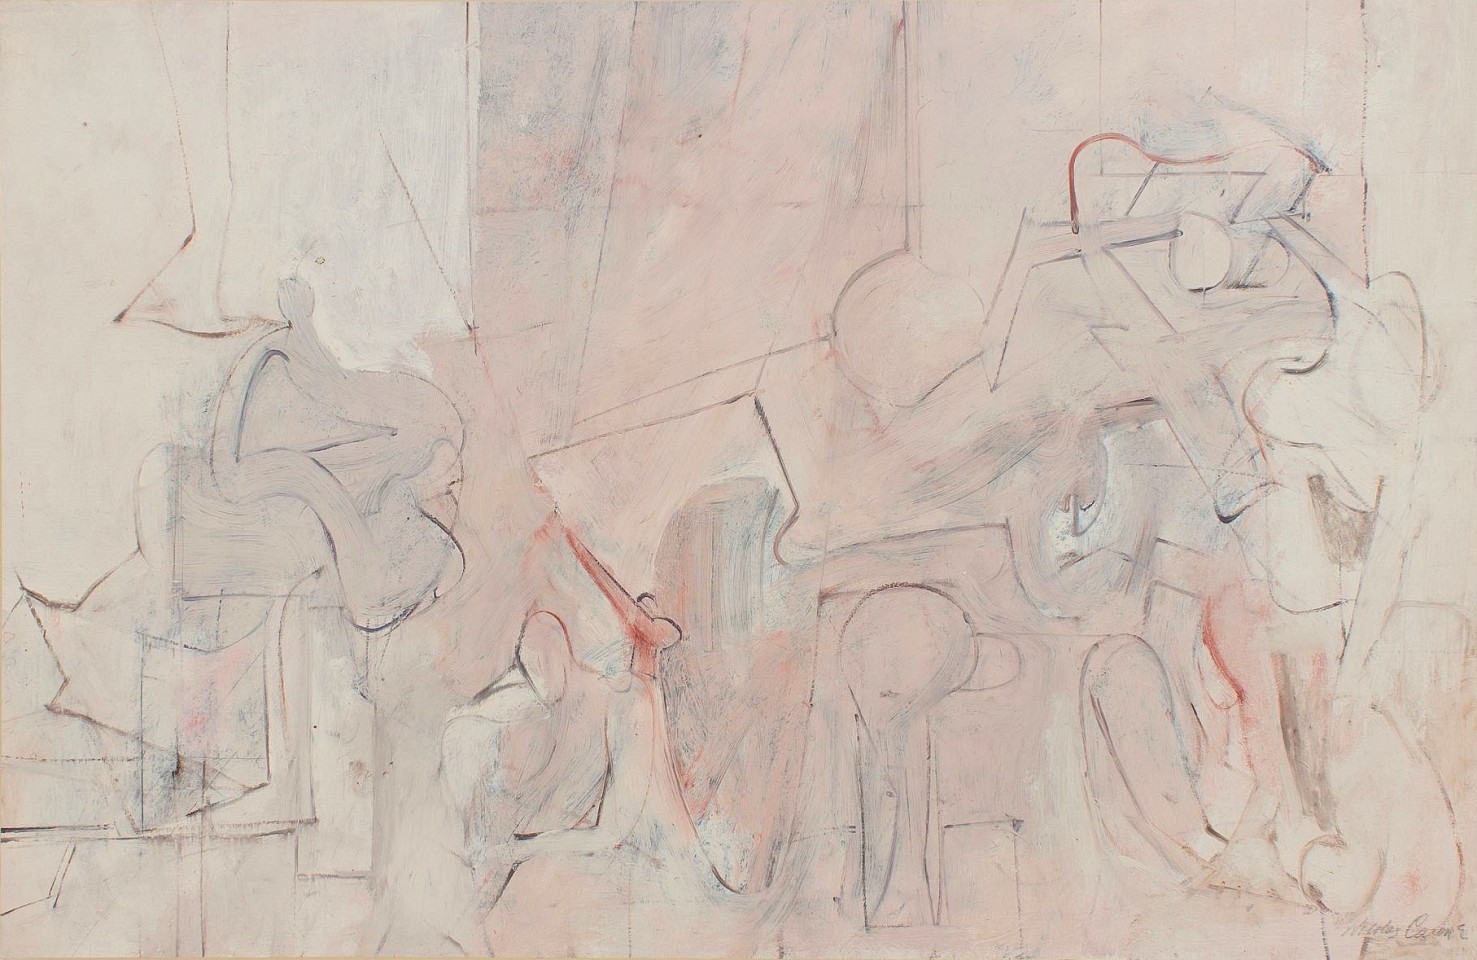 Nicholas Carone, Untitled (W-1357-S), 1965
oil and pencil on board, 26 x 40 in. (66 x 101.6 cm)
NC161003